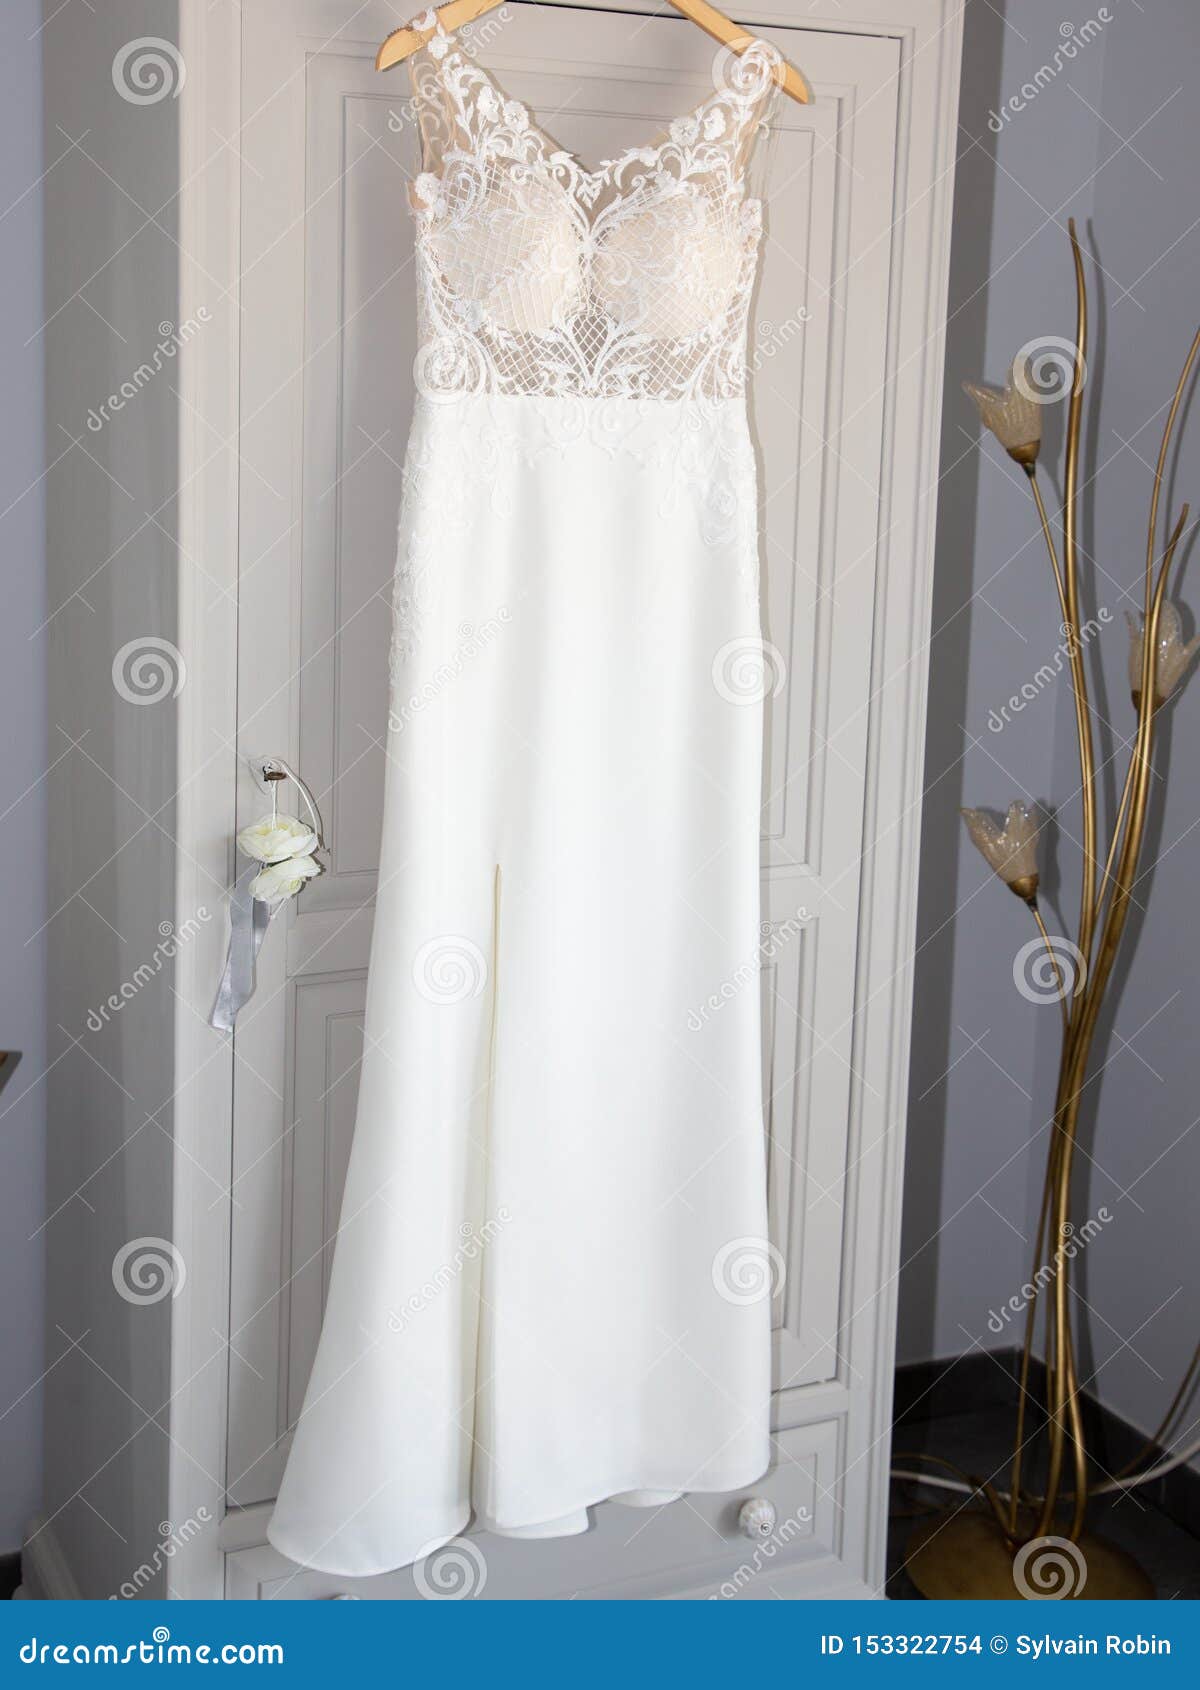 White Modern Wedding Dress on a Hanger Stock Photo - Image of modern ...